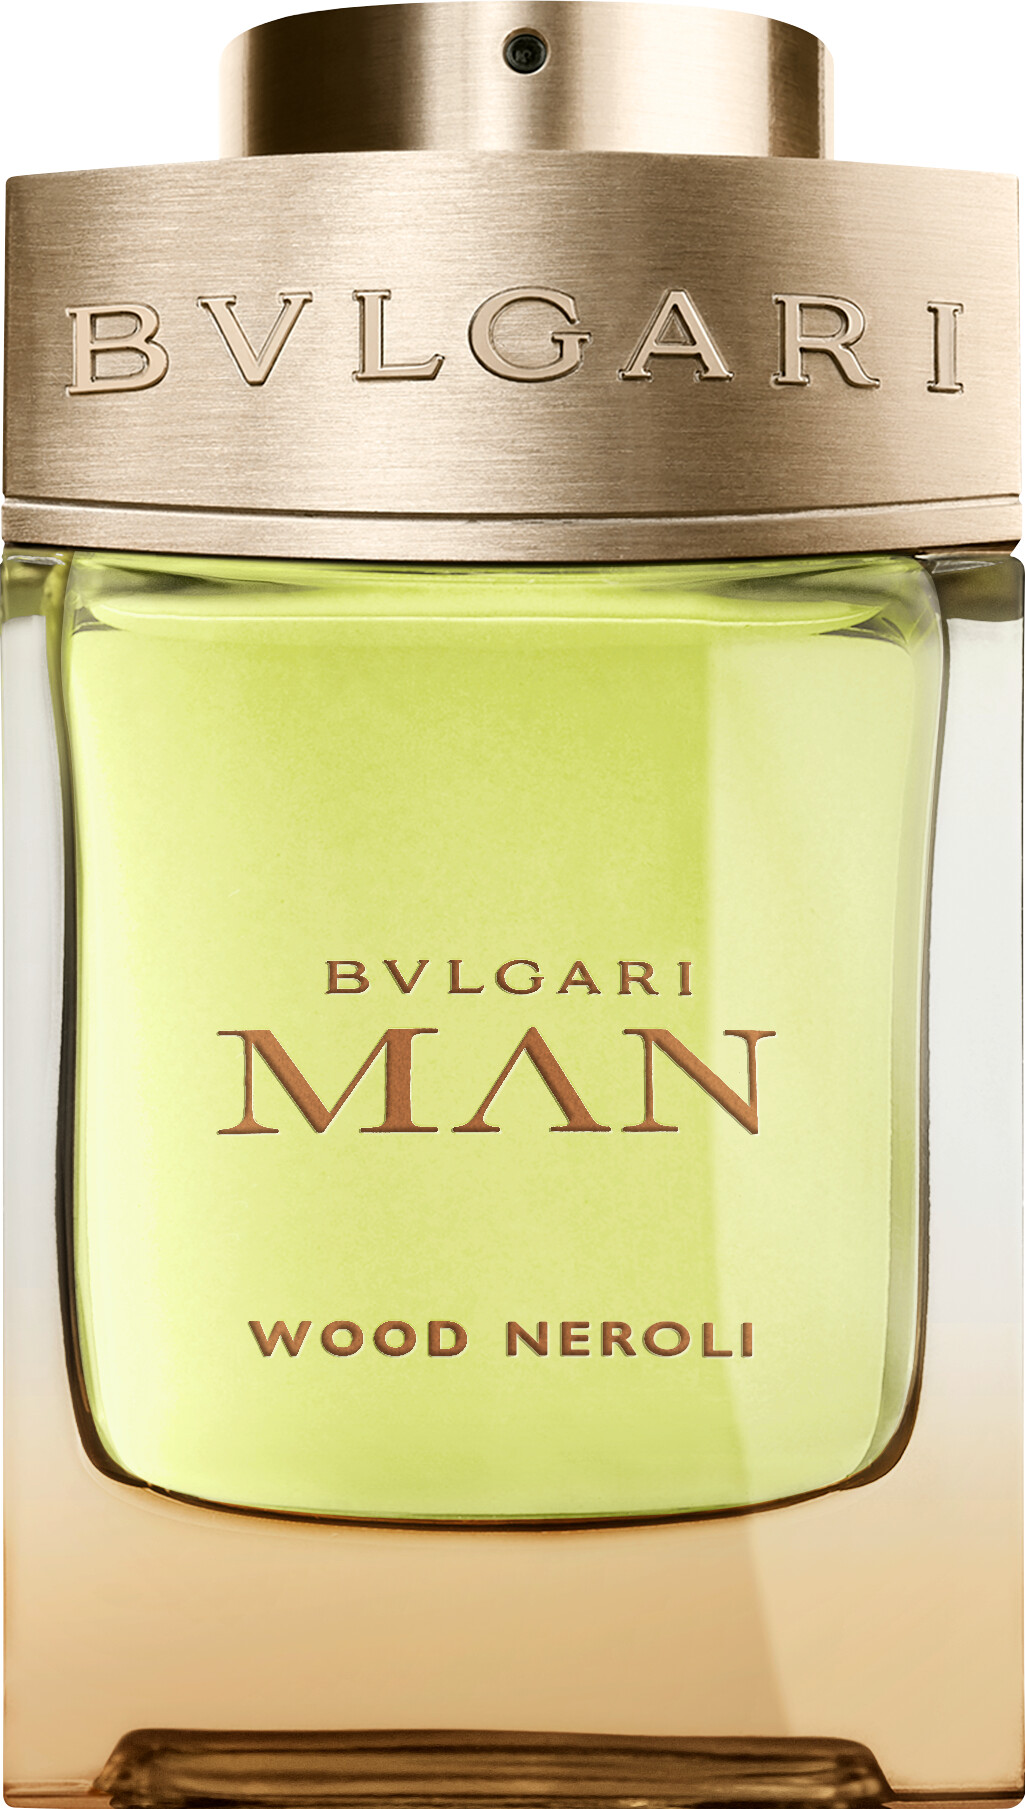 bvlgari man wood neroli review